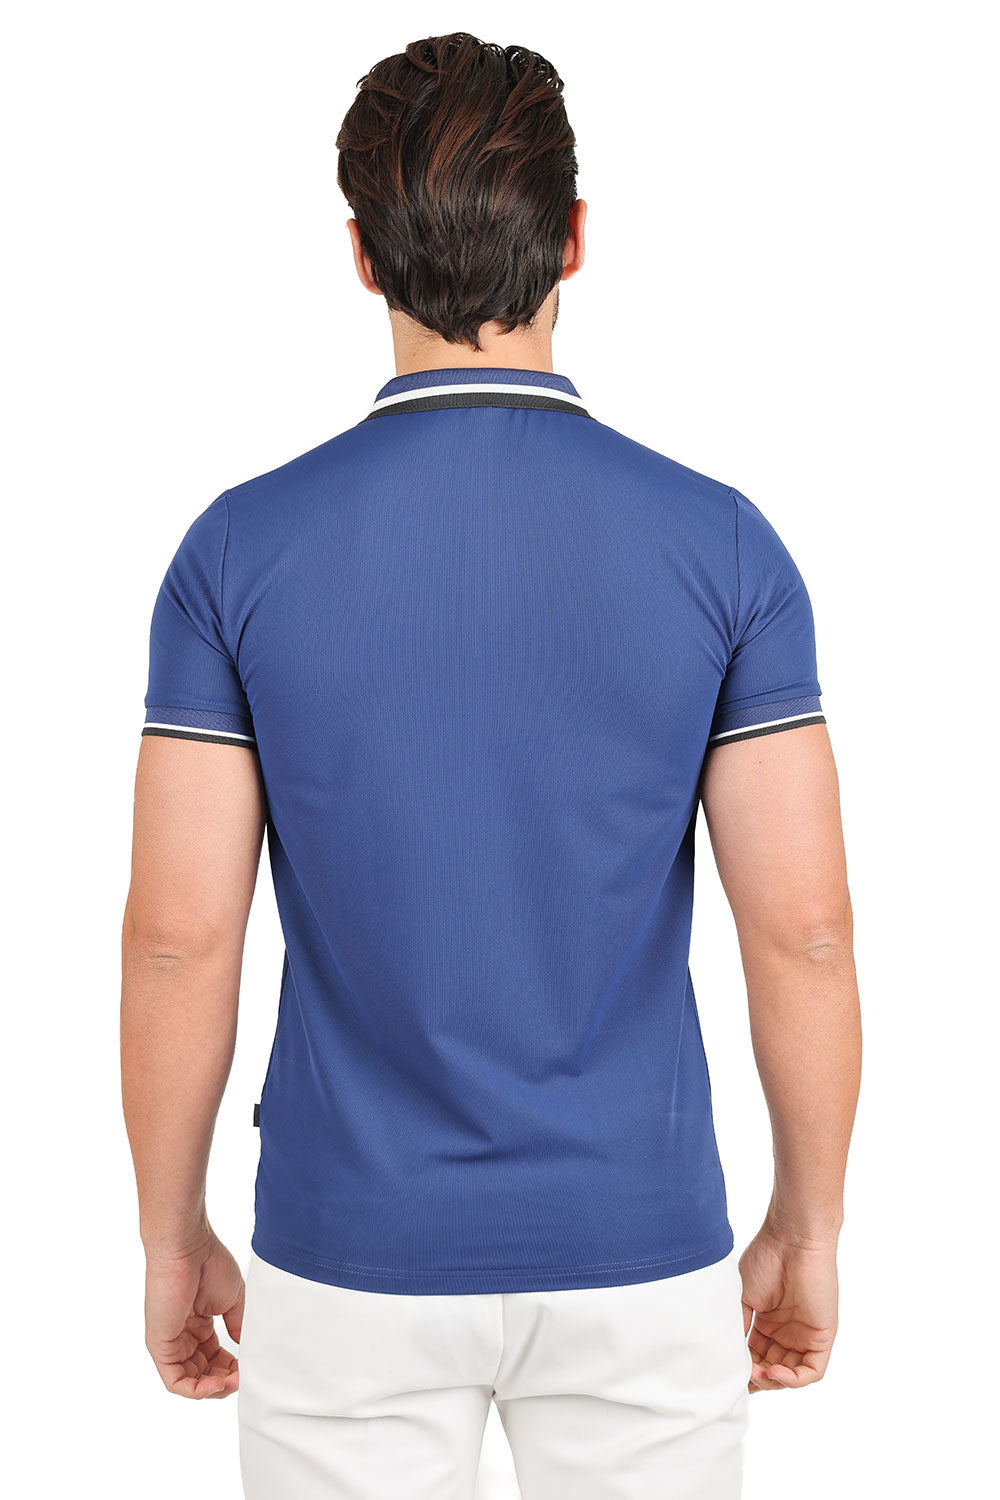 Barabas Men's Solid Color Cotton Short Sleeve Polo Shirts 3PS125 Navy